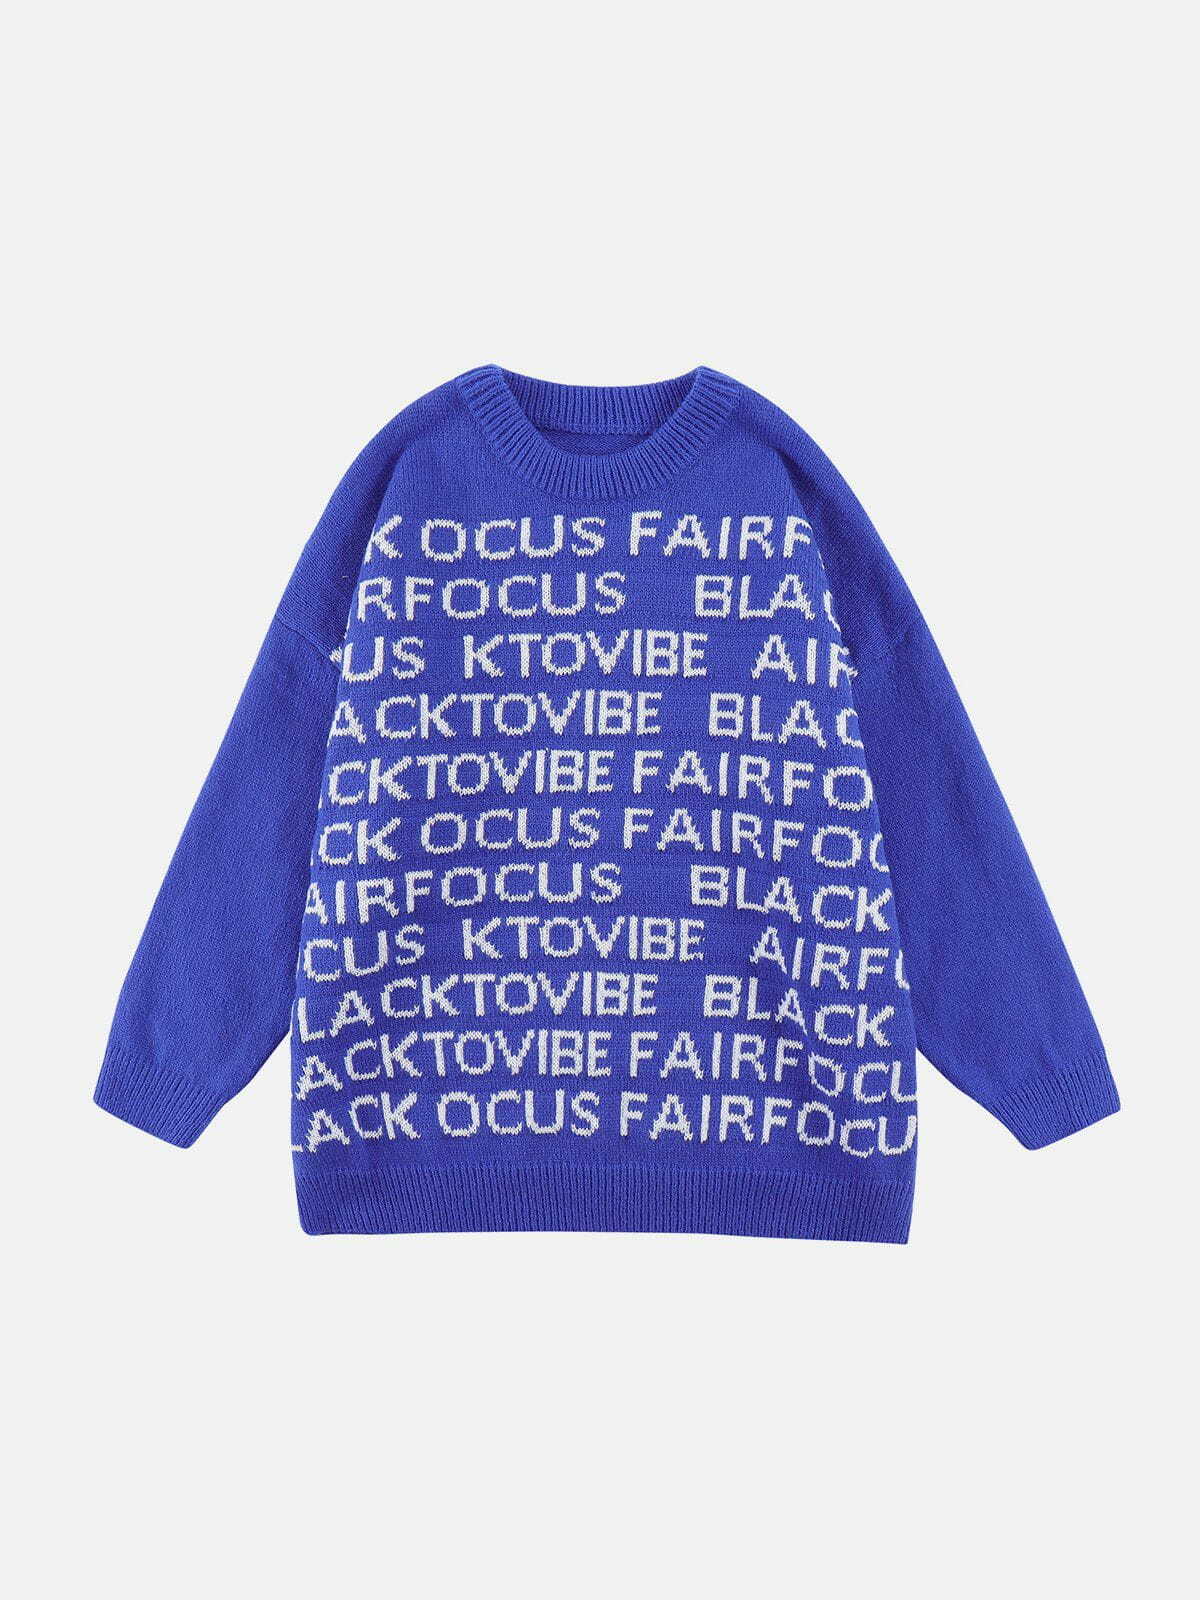 retro alphabet sweater edgy & vibrant streetwear 2384